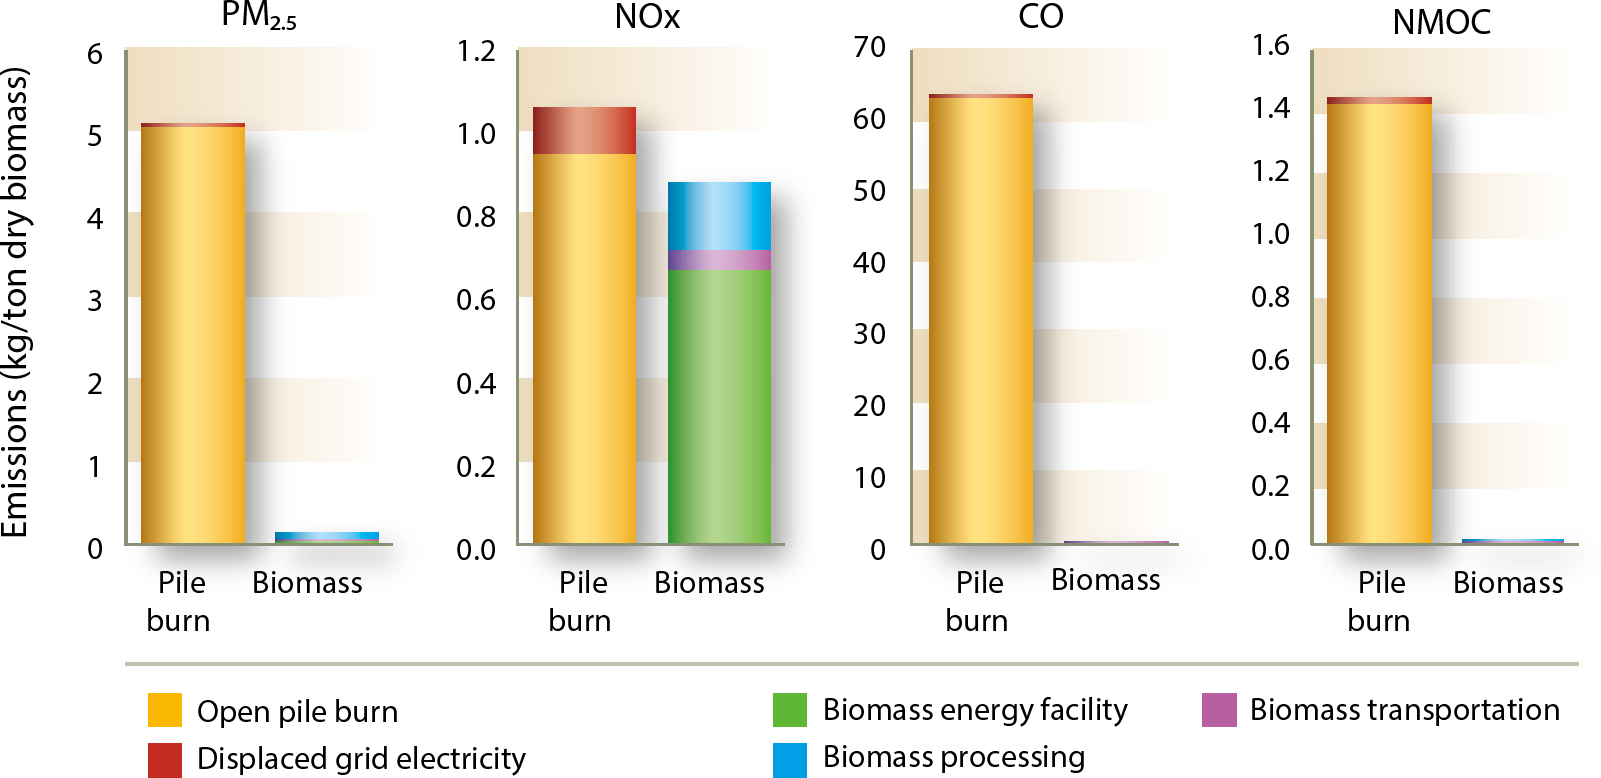 Criteria air pollutant emissions comparison: pile burn versus biomass energy project.